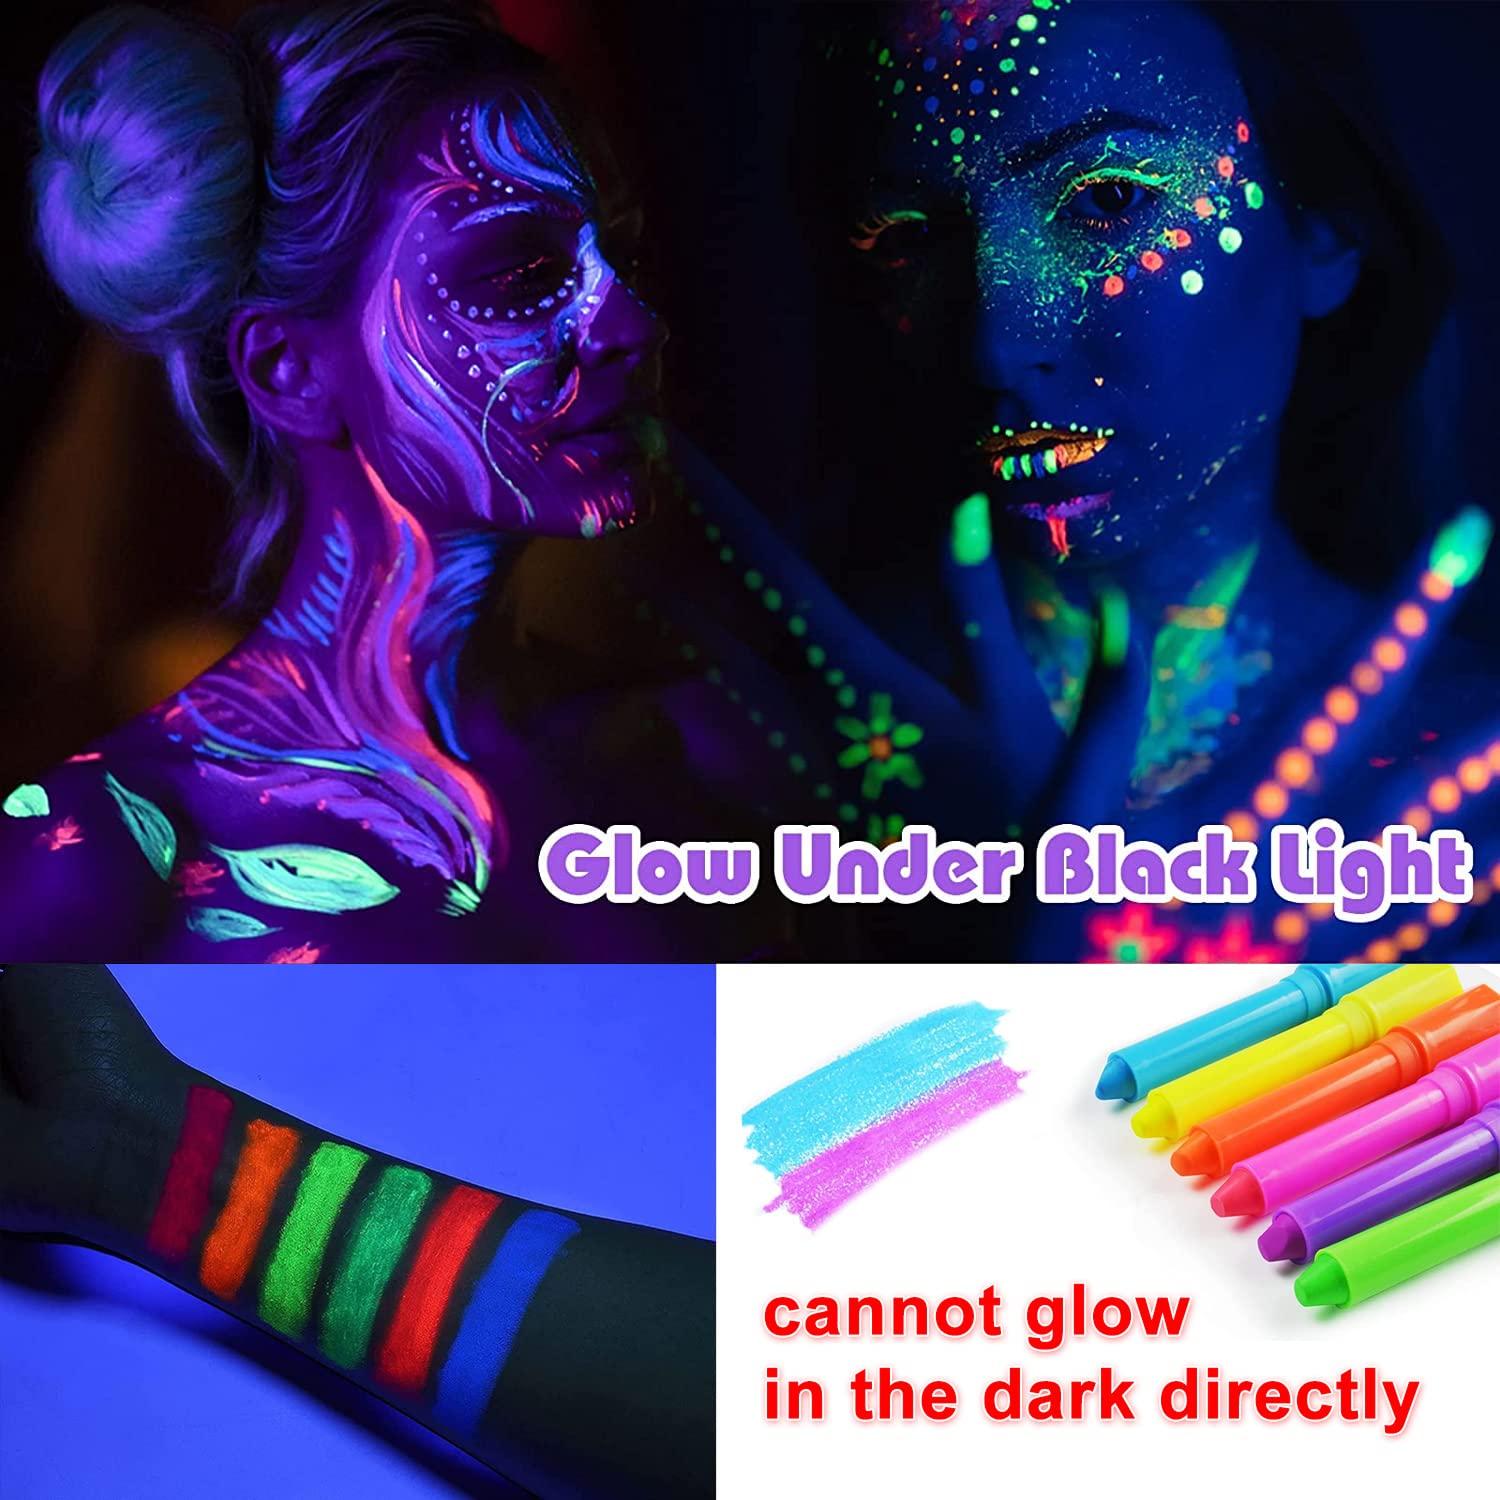 Photograph, Crayons Under UV Light